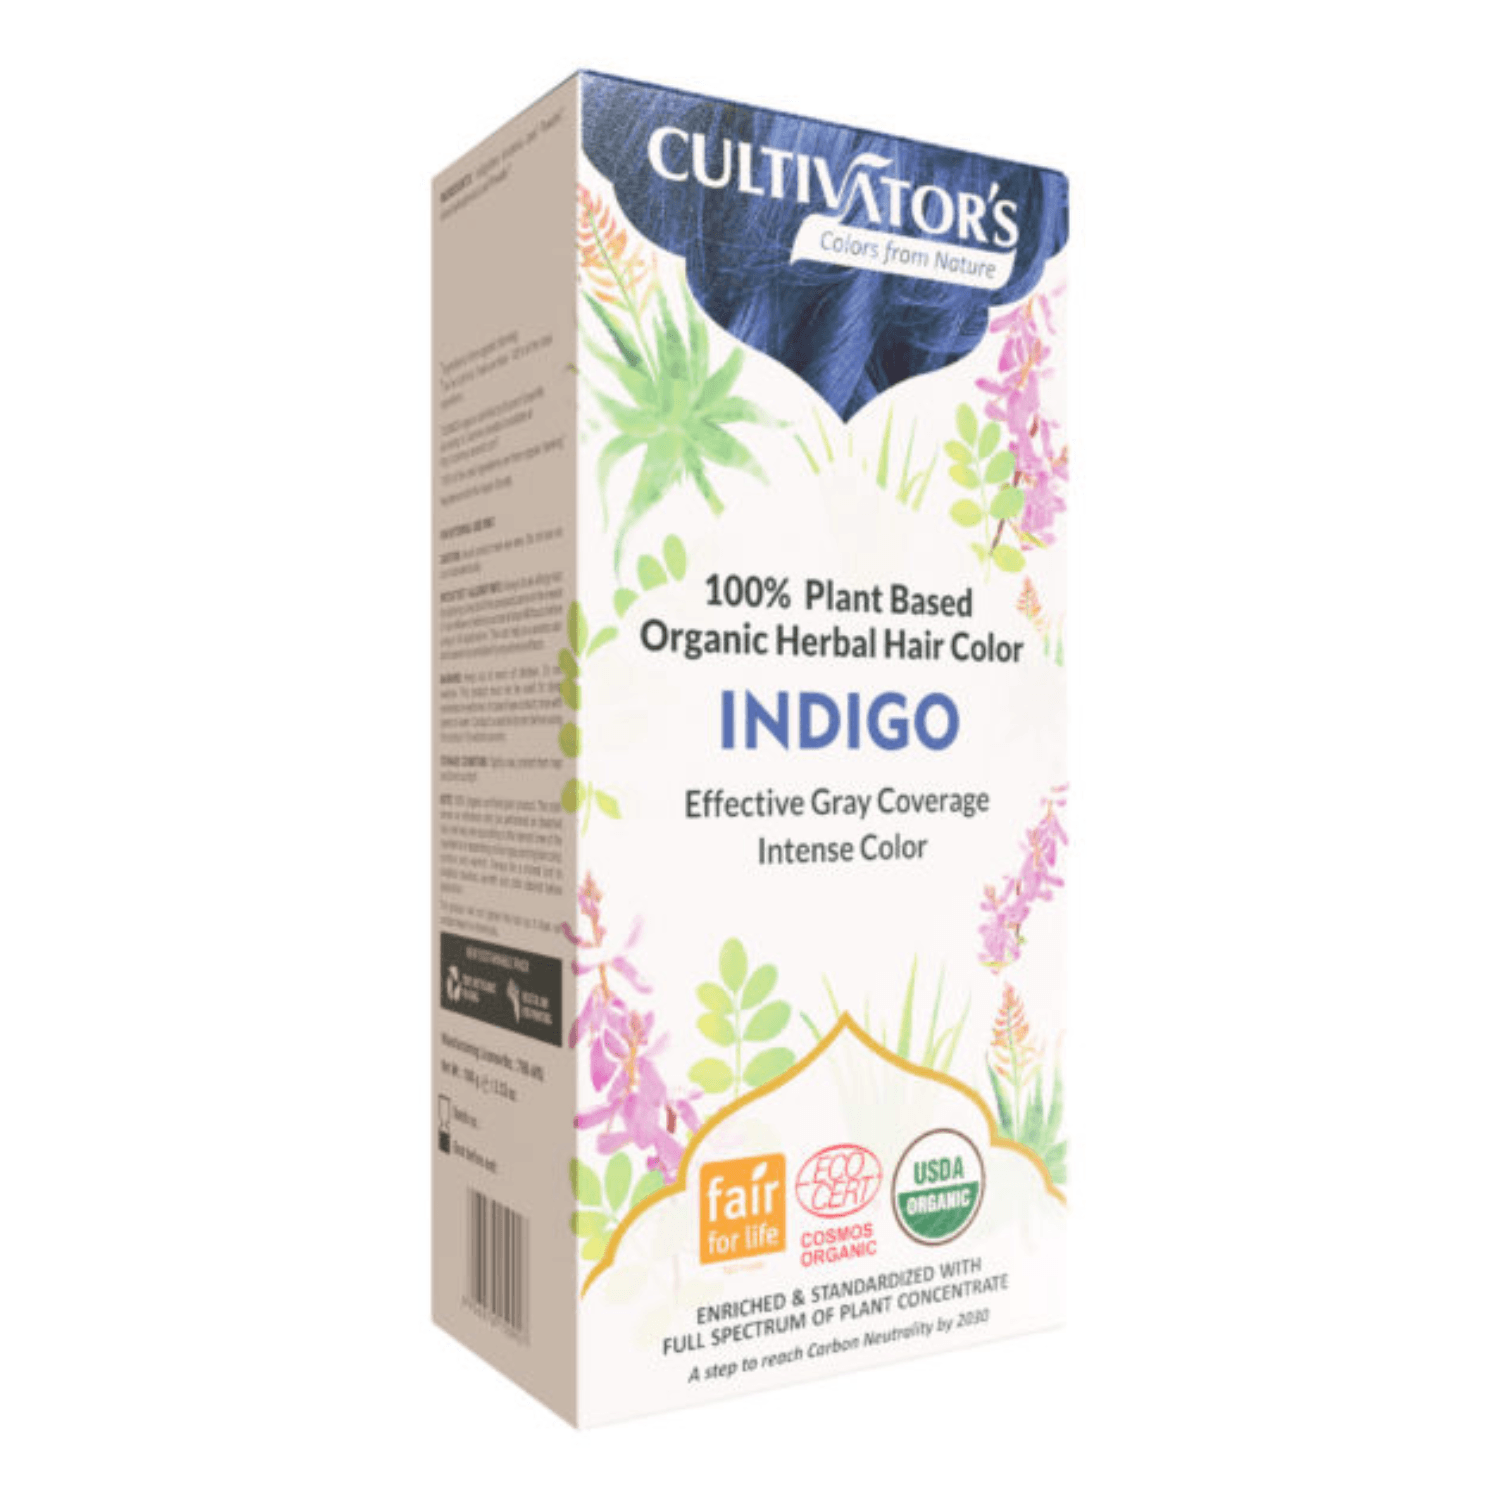 Cultivators Organic Herbal Hair Color, Indigo